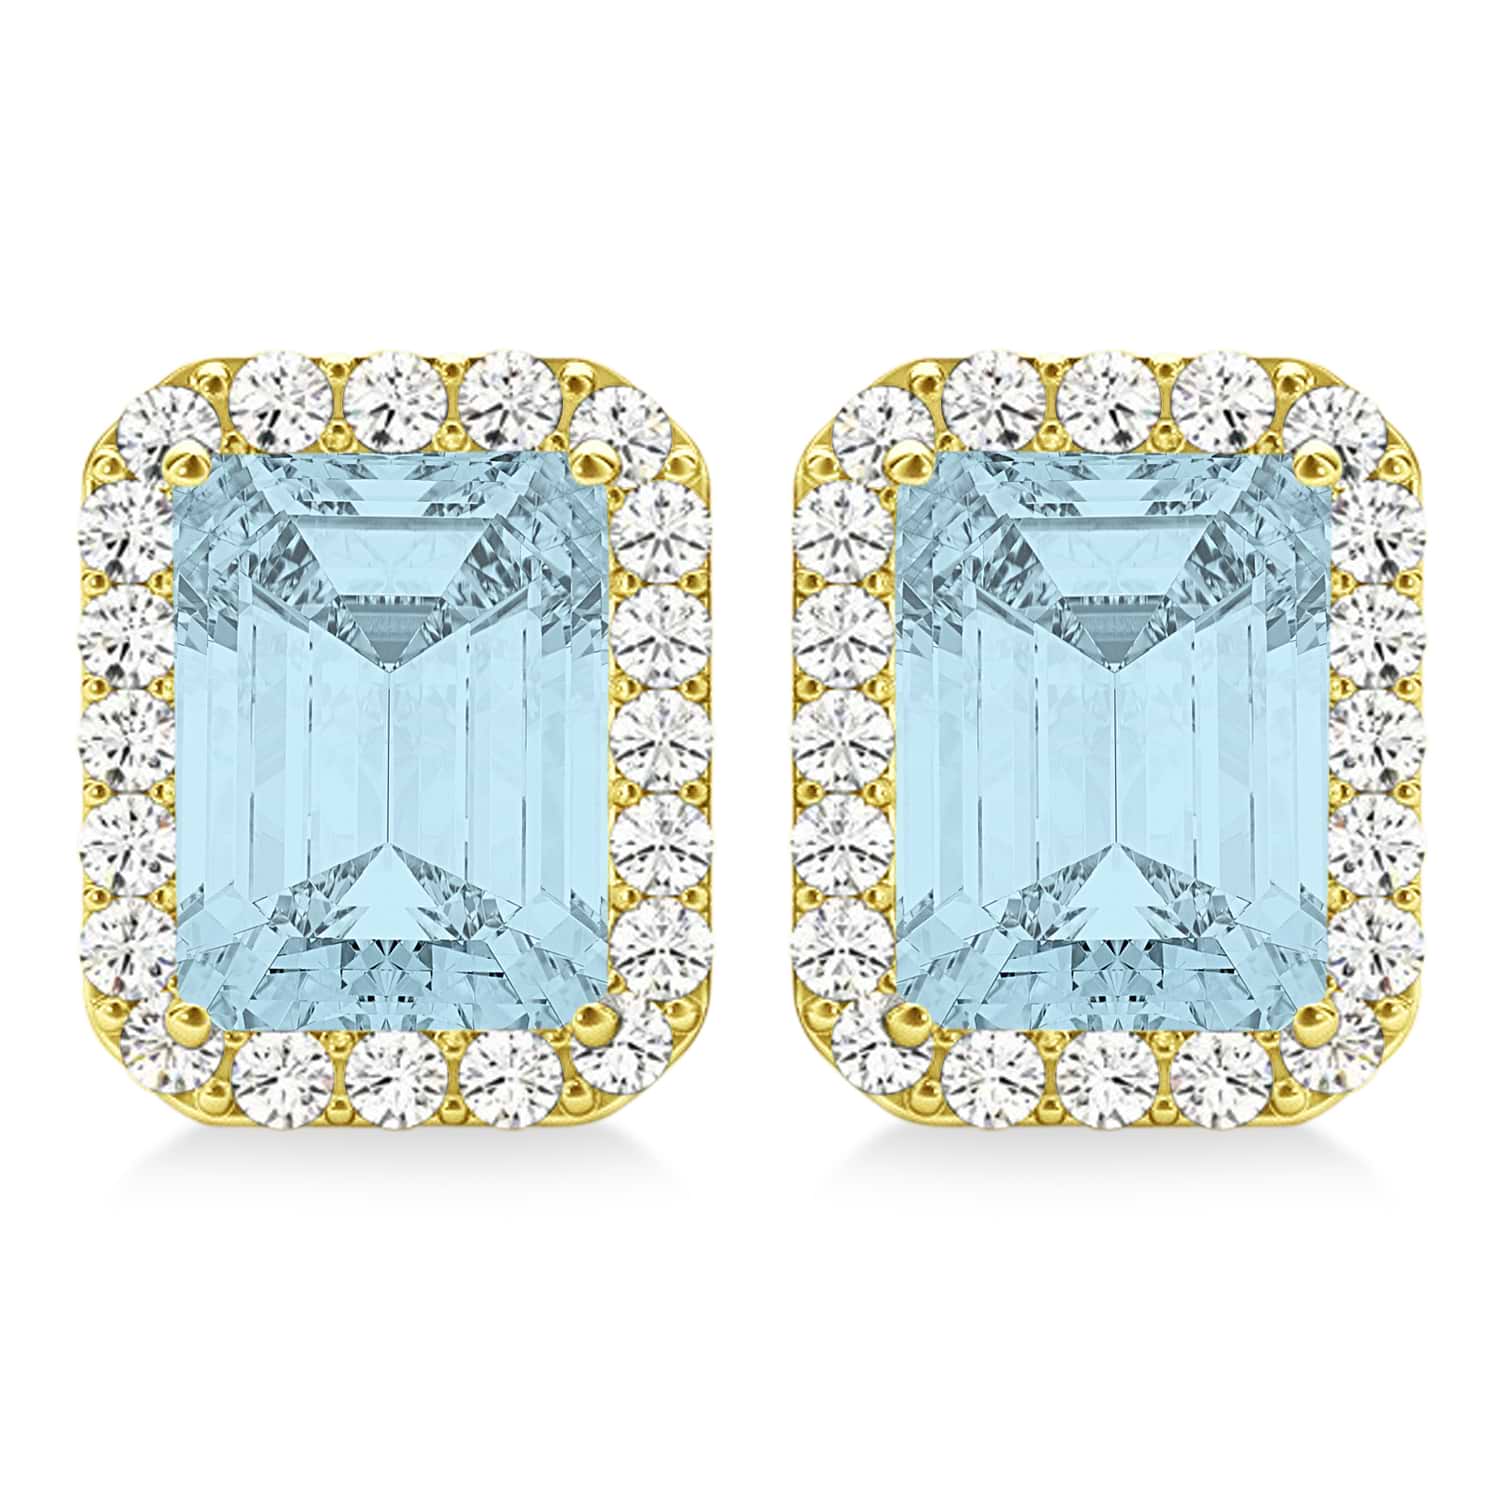 Emerald Cut Aquamarine & Diamond Halo Earrings 14k Yellow Gold (1.80ct)